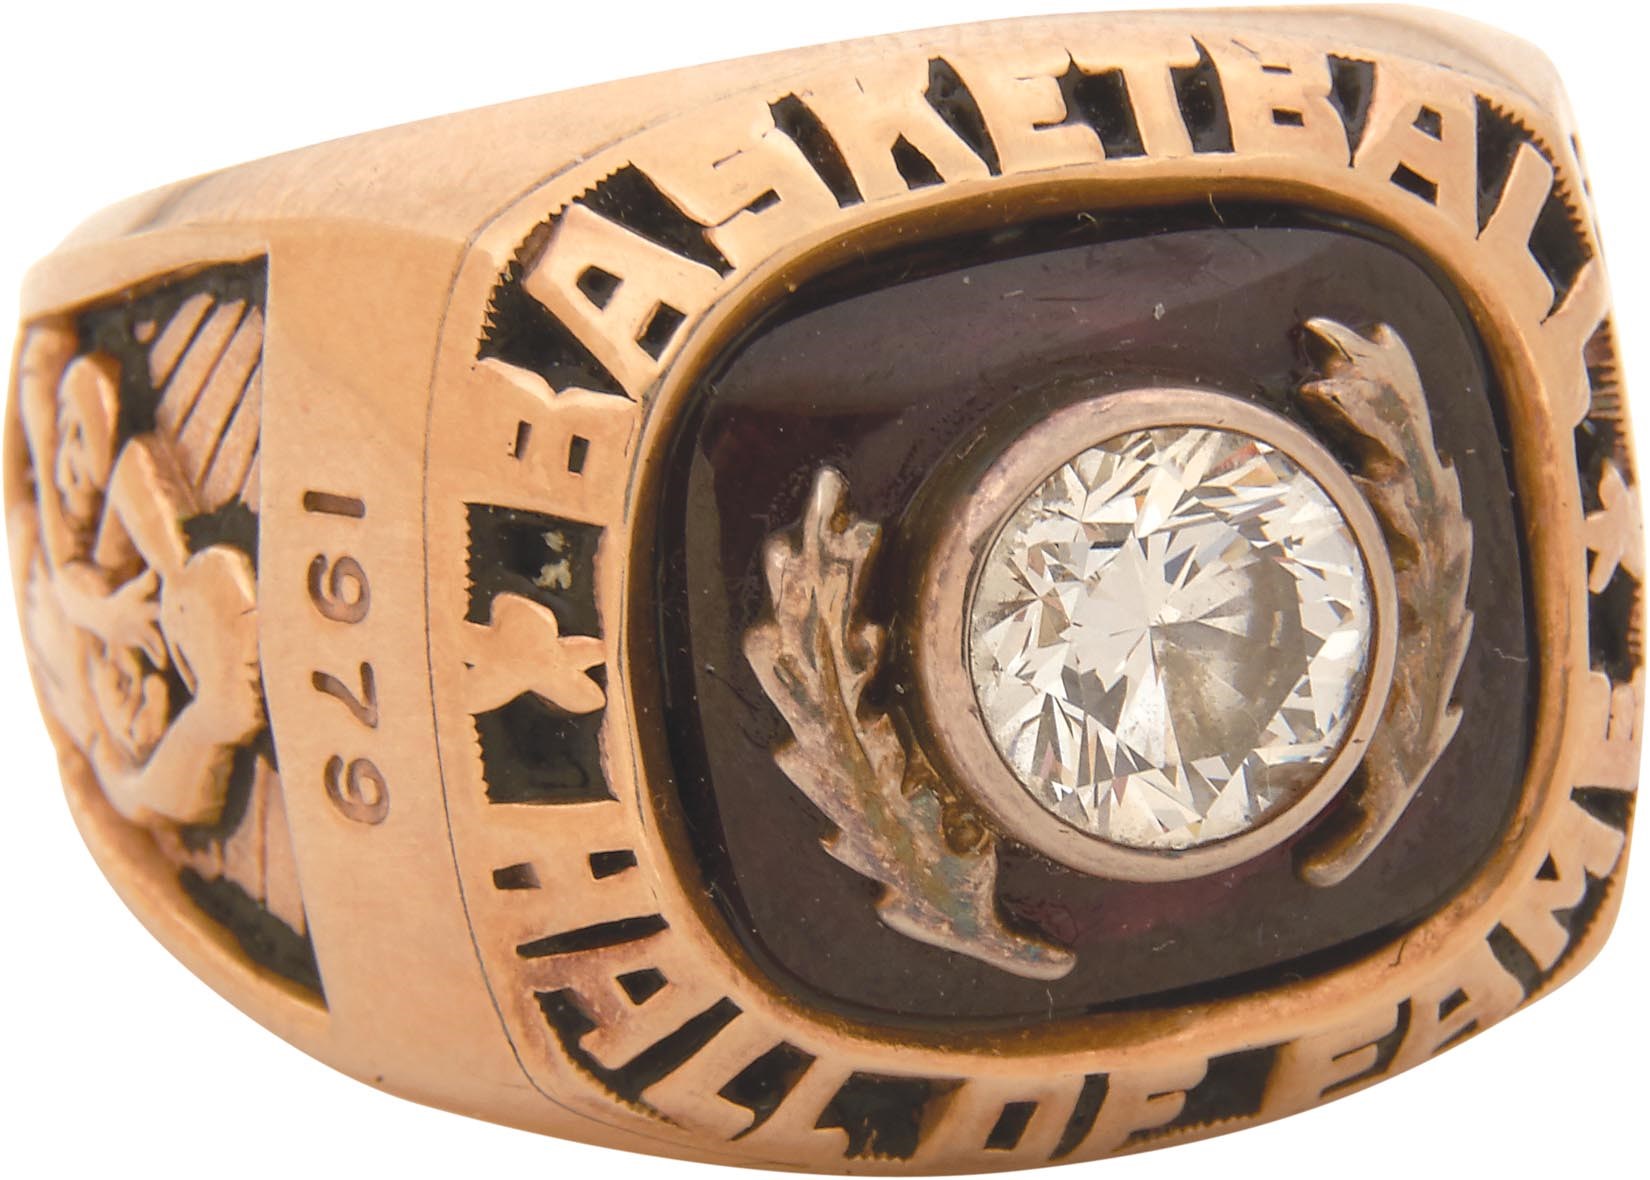 The Oscar Robertson Collection - Oscar Robertson Basketball Hall of Fame Ring